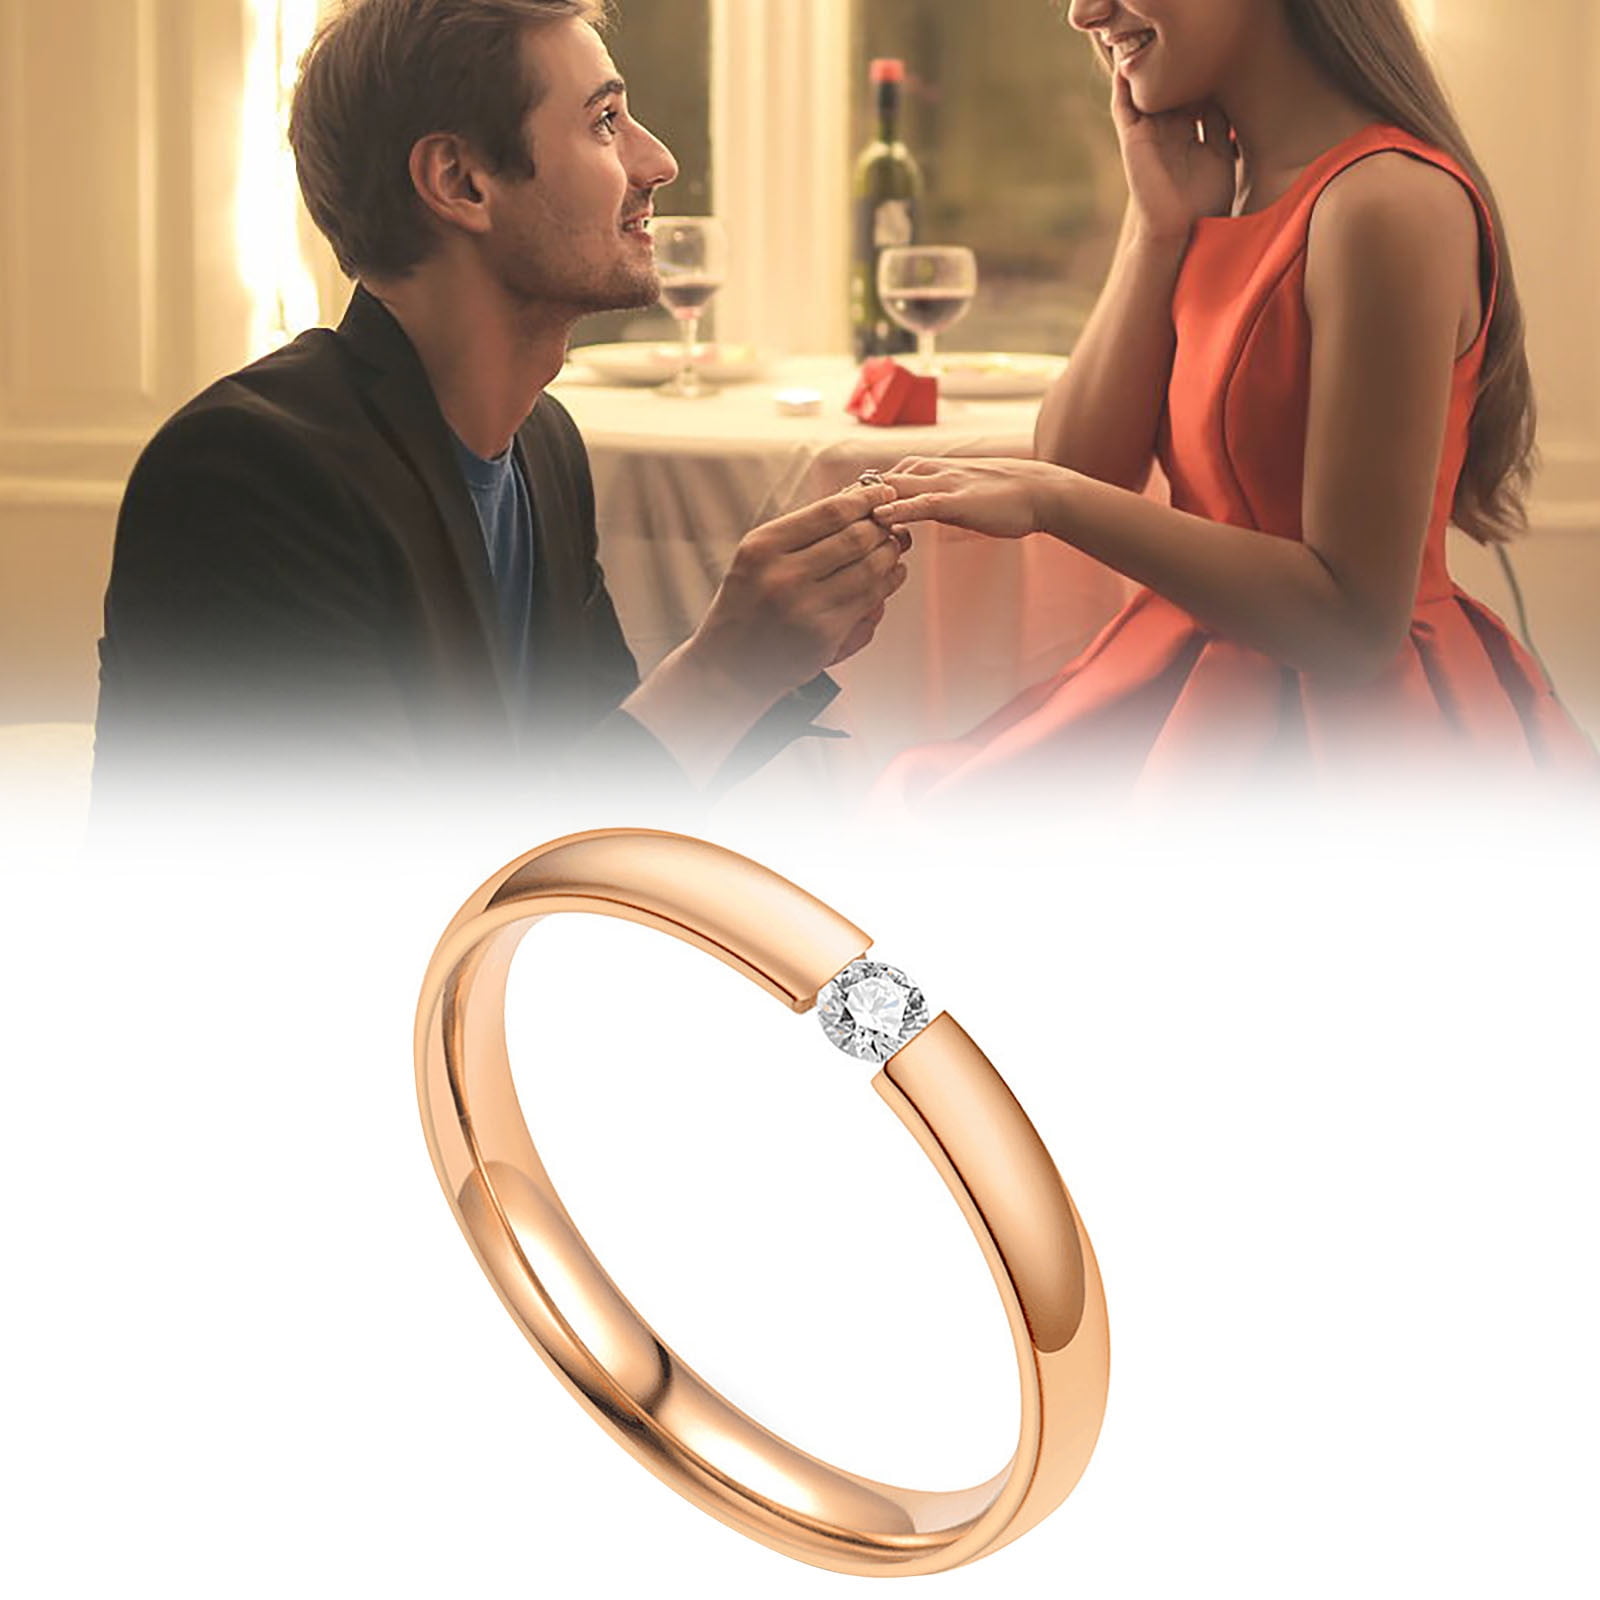 Stunning Cartier-inspired Love Ring on Amazon